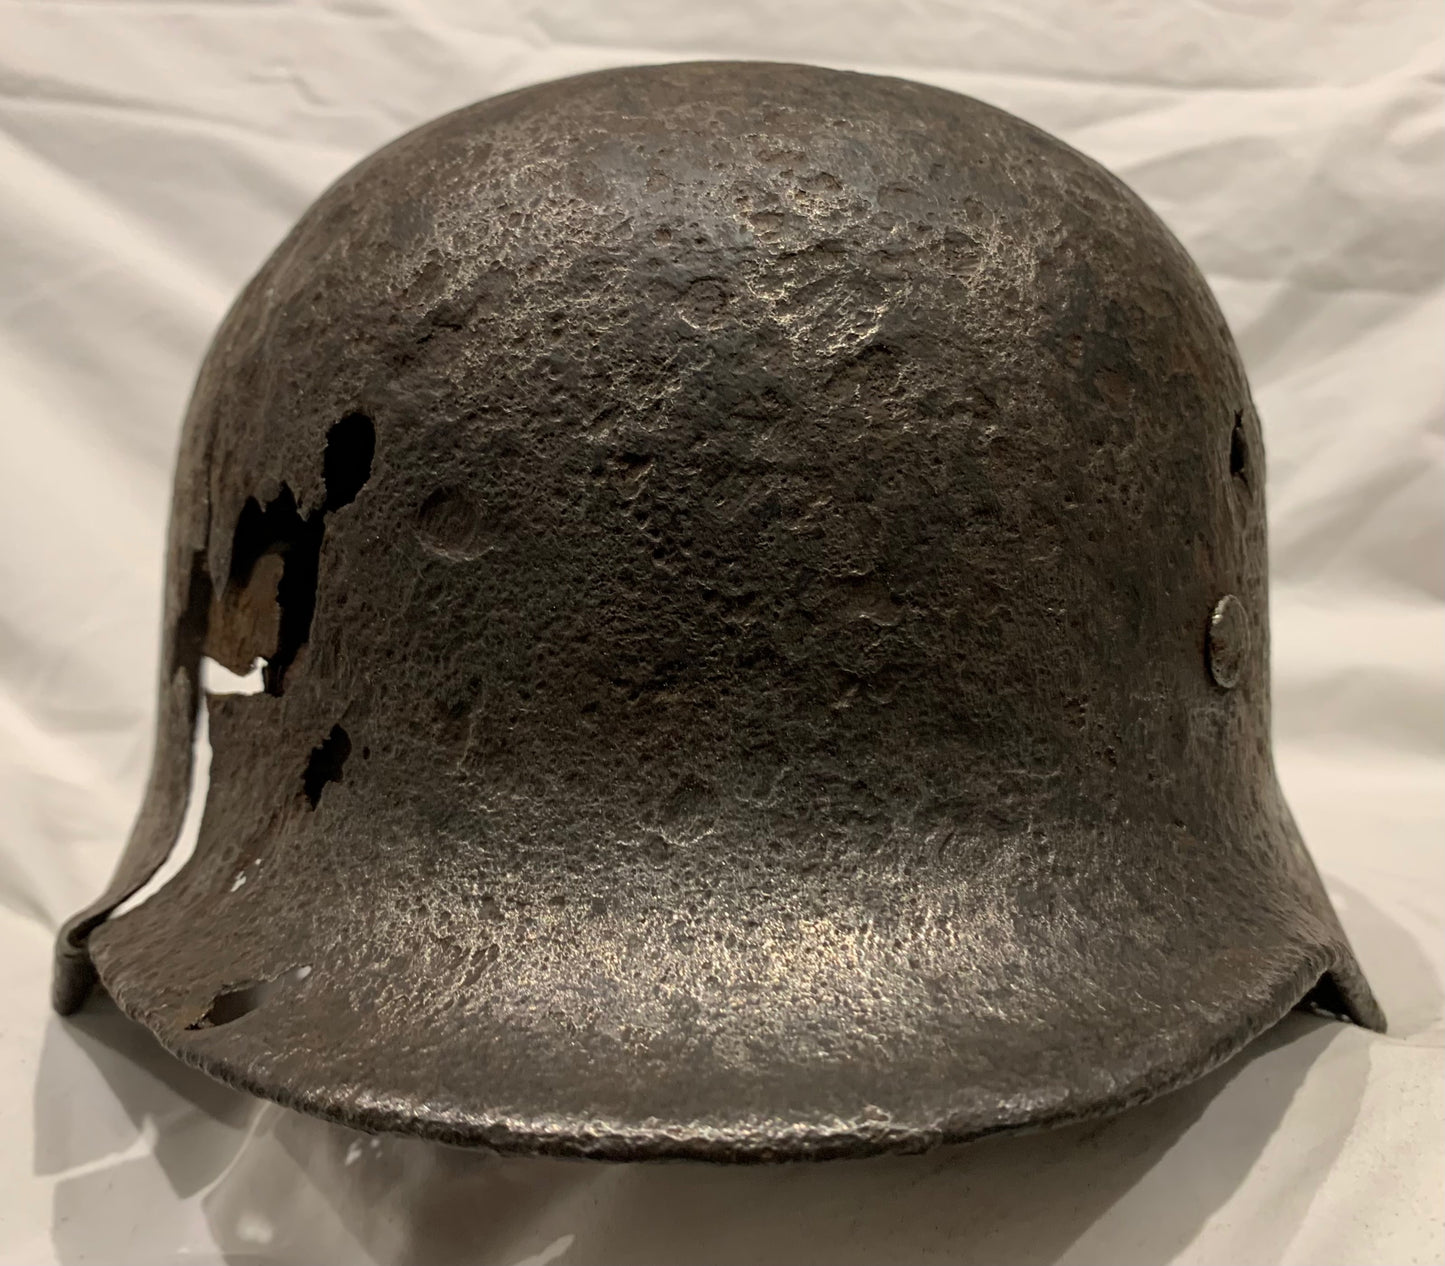 WW2 German M40 Battle Damaged Helmet from the Eastern Front.